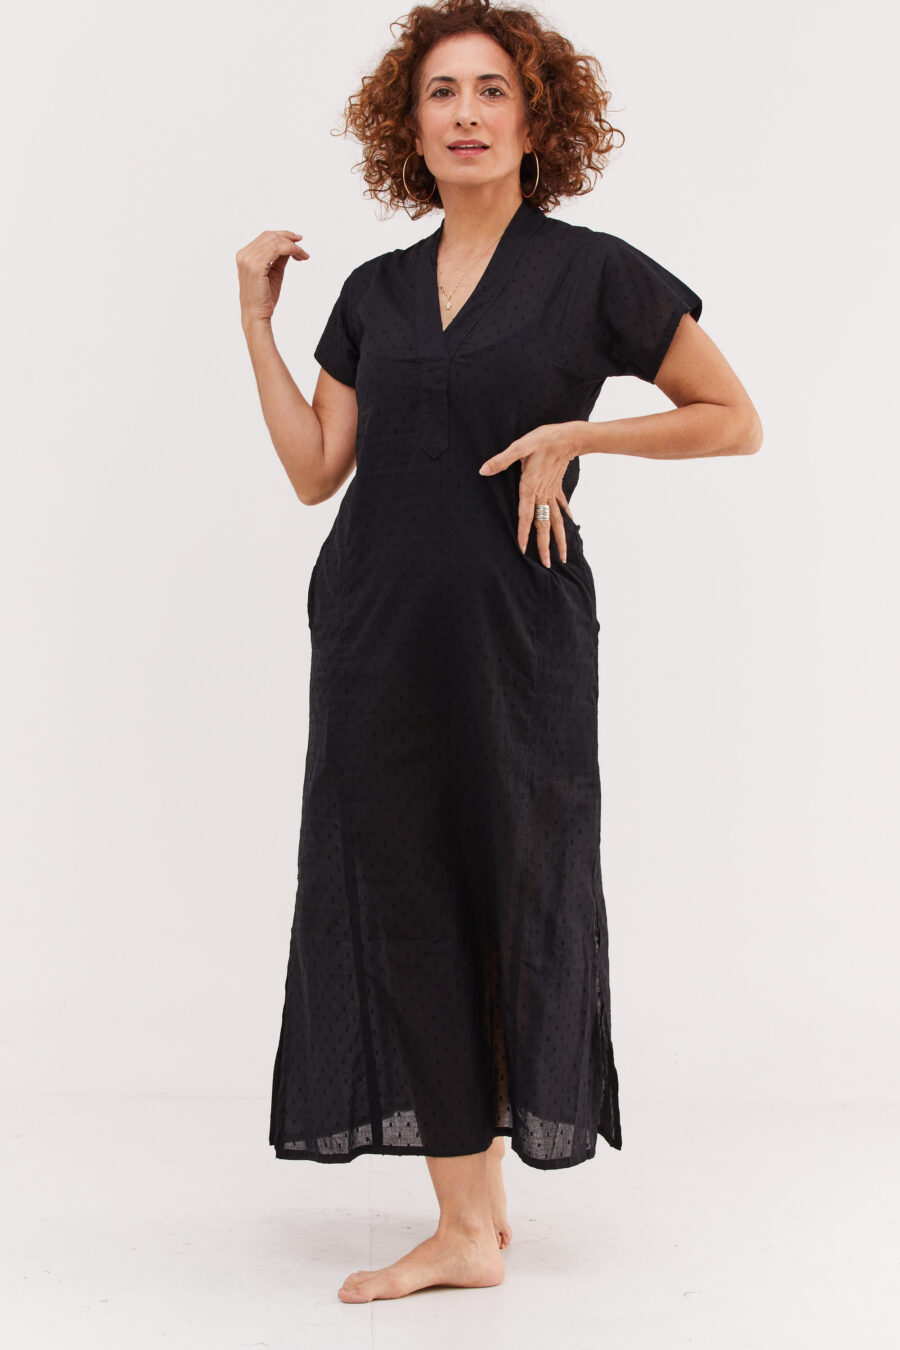 Jalabiya dress | Uniquely designed dress - Black dress with textured black circles